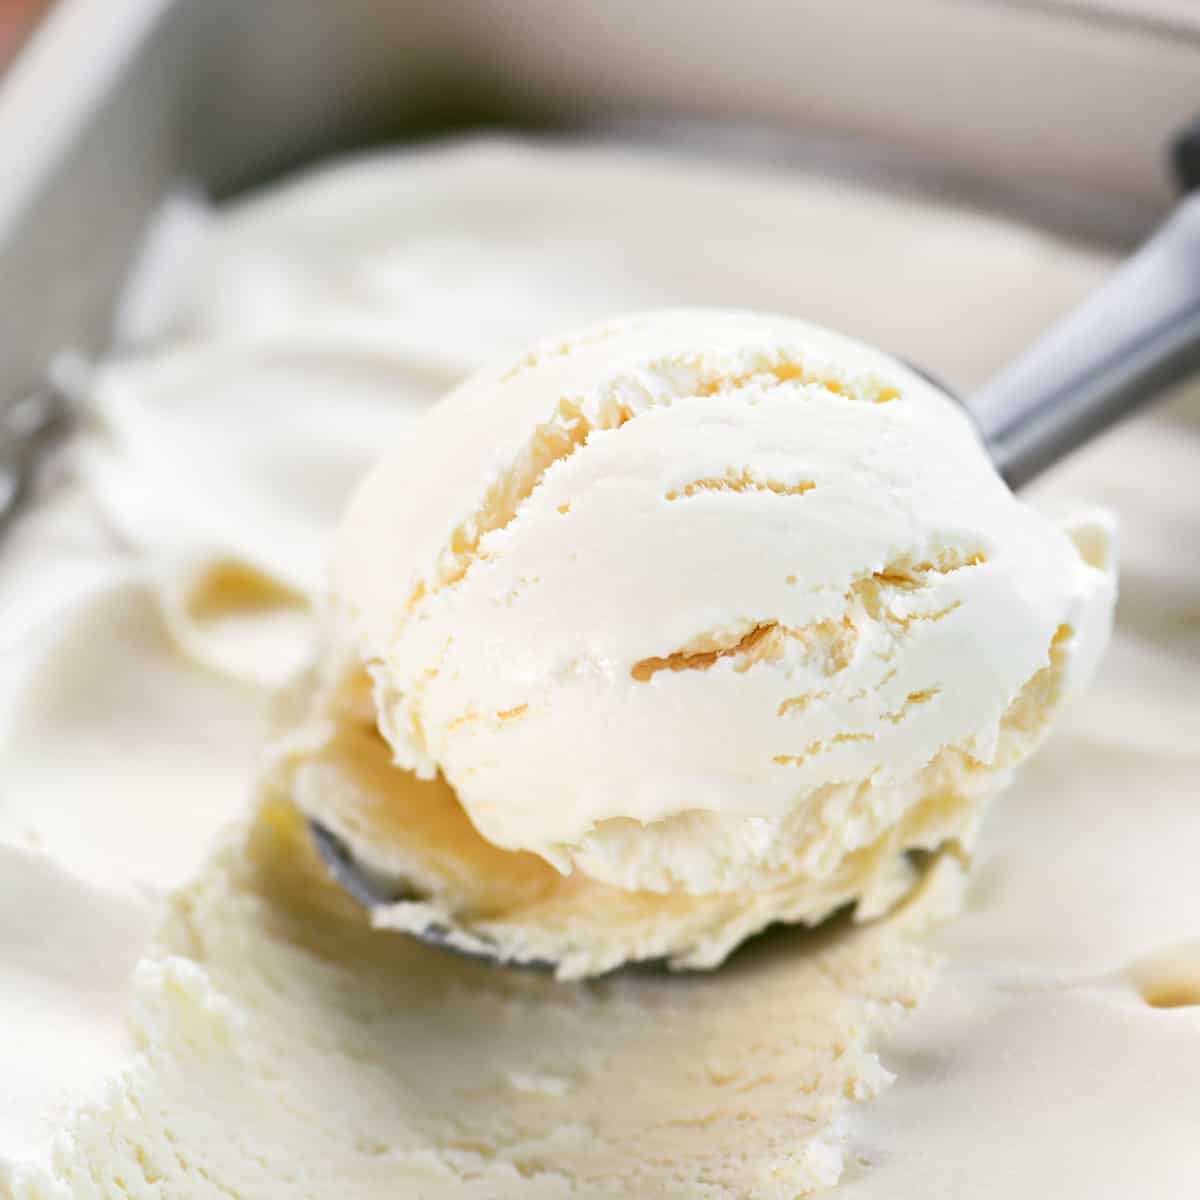 A scoop of 3 ingredient ice cream.